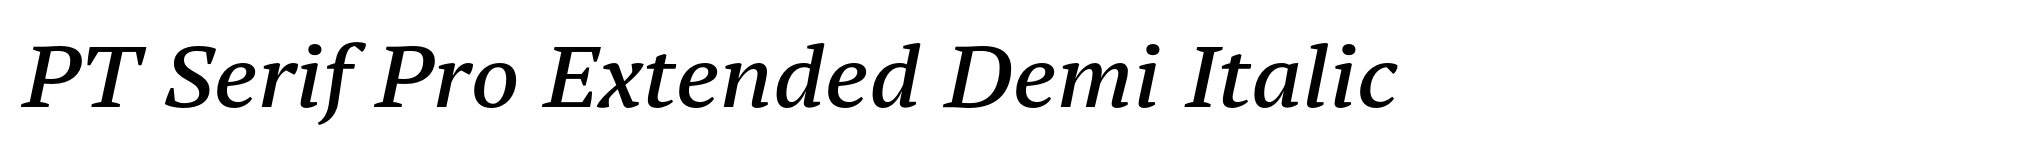 PT Serif Pro Extended Demi Italic image